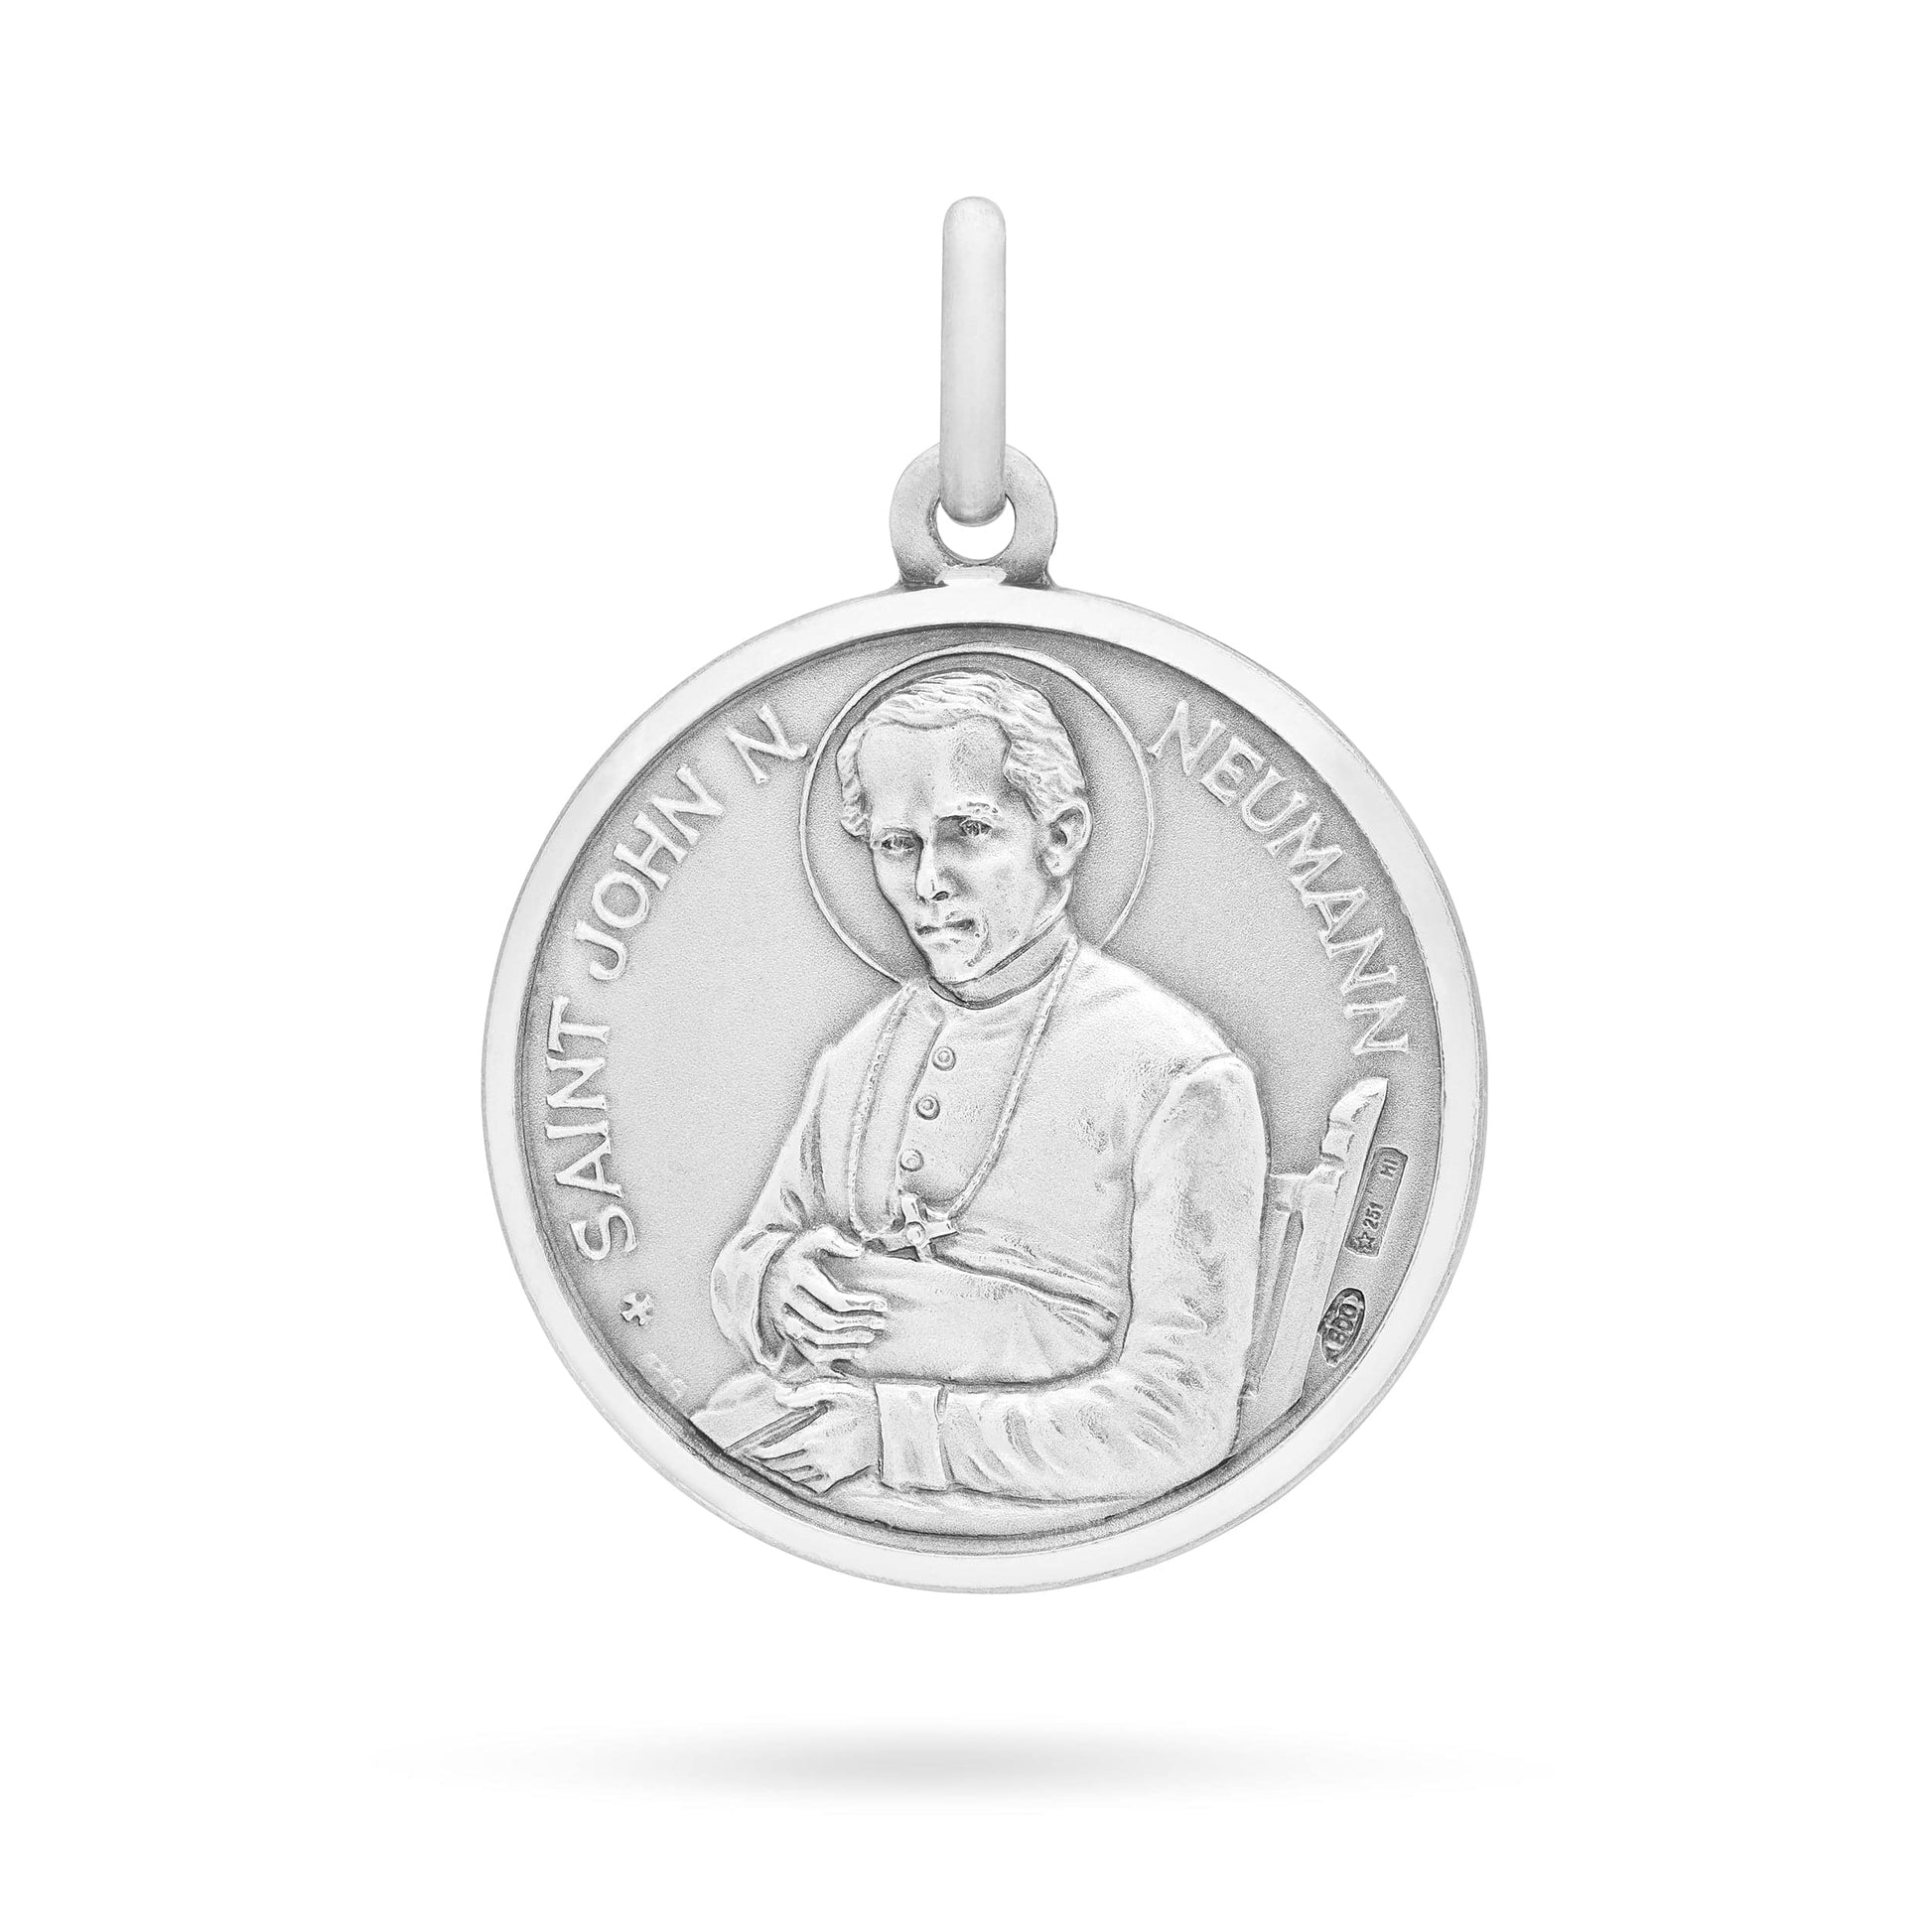 MONDO CATTOLICO Medal 25 mm (0.98 in) Silver medal of Saint John N. Neumann